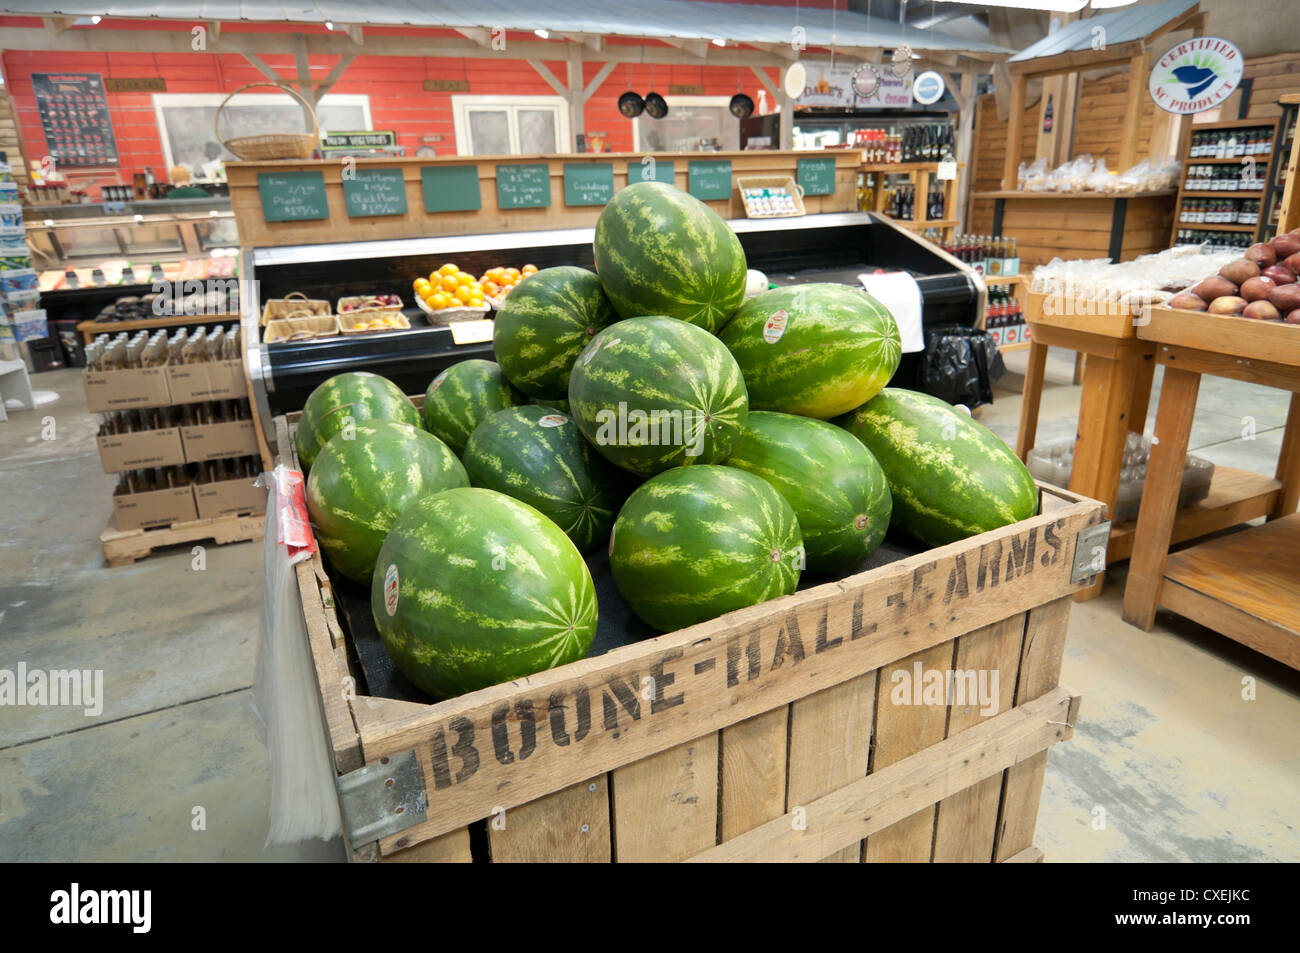 Boone Hall Farms Market befindet sich in der Nähe von Boone Hall Plantage in der Nähe von Charleston, South Carolina. Stockfoto